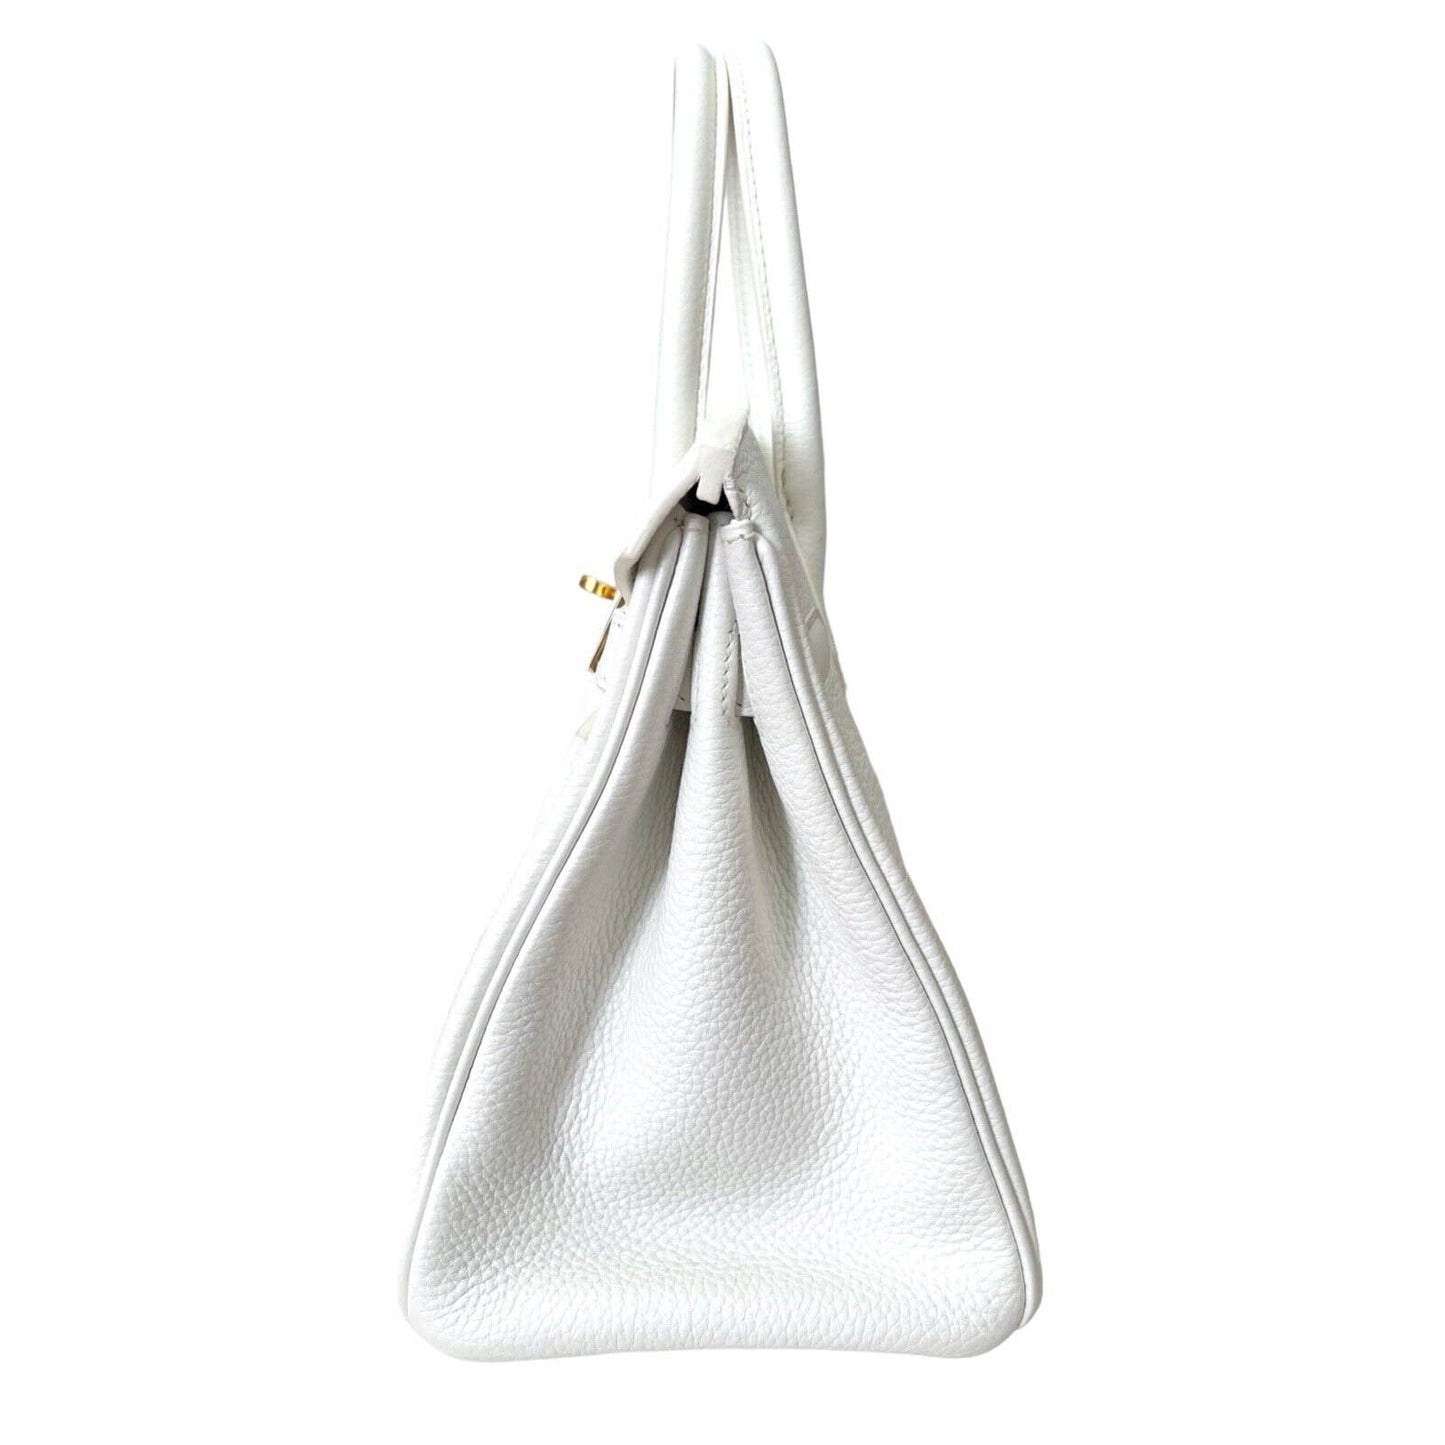 Hermes Birkin 30 White Leather Gold Hardware Bag Handbag